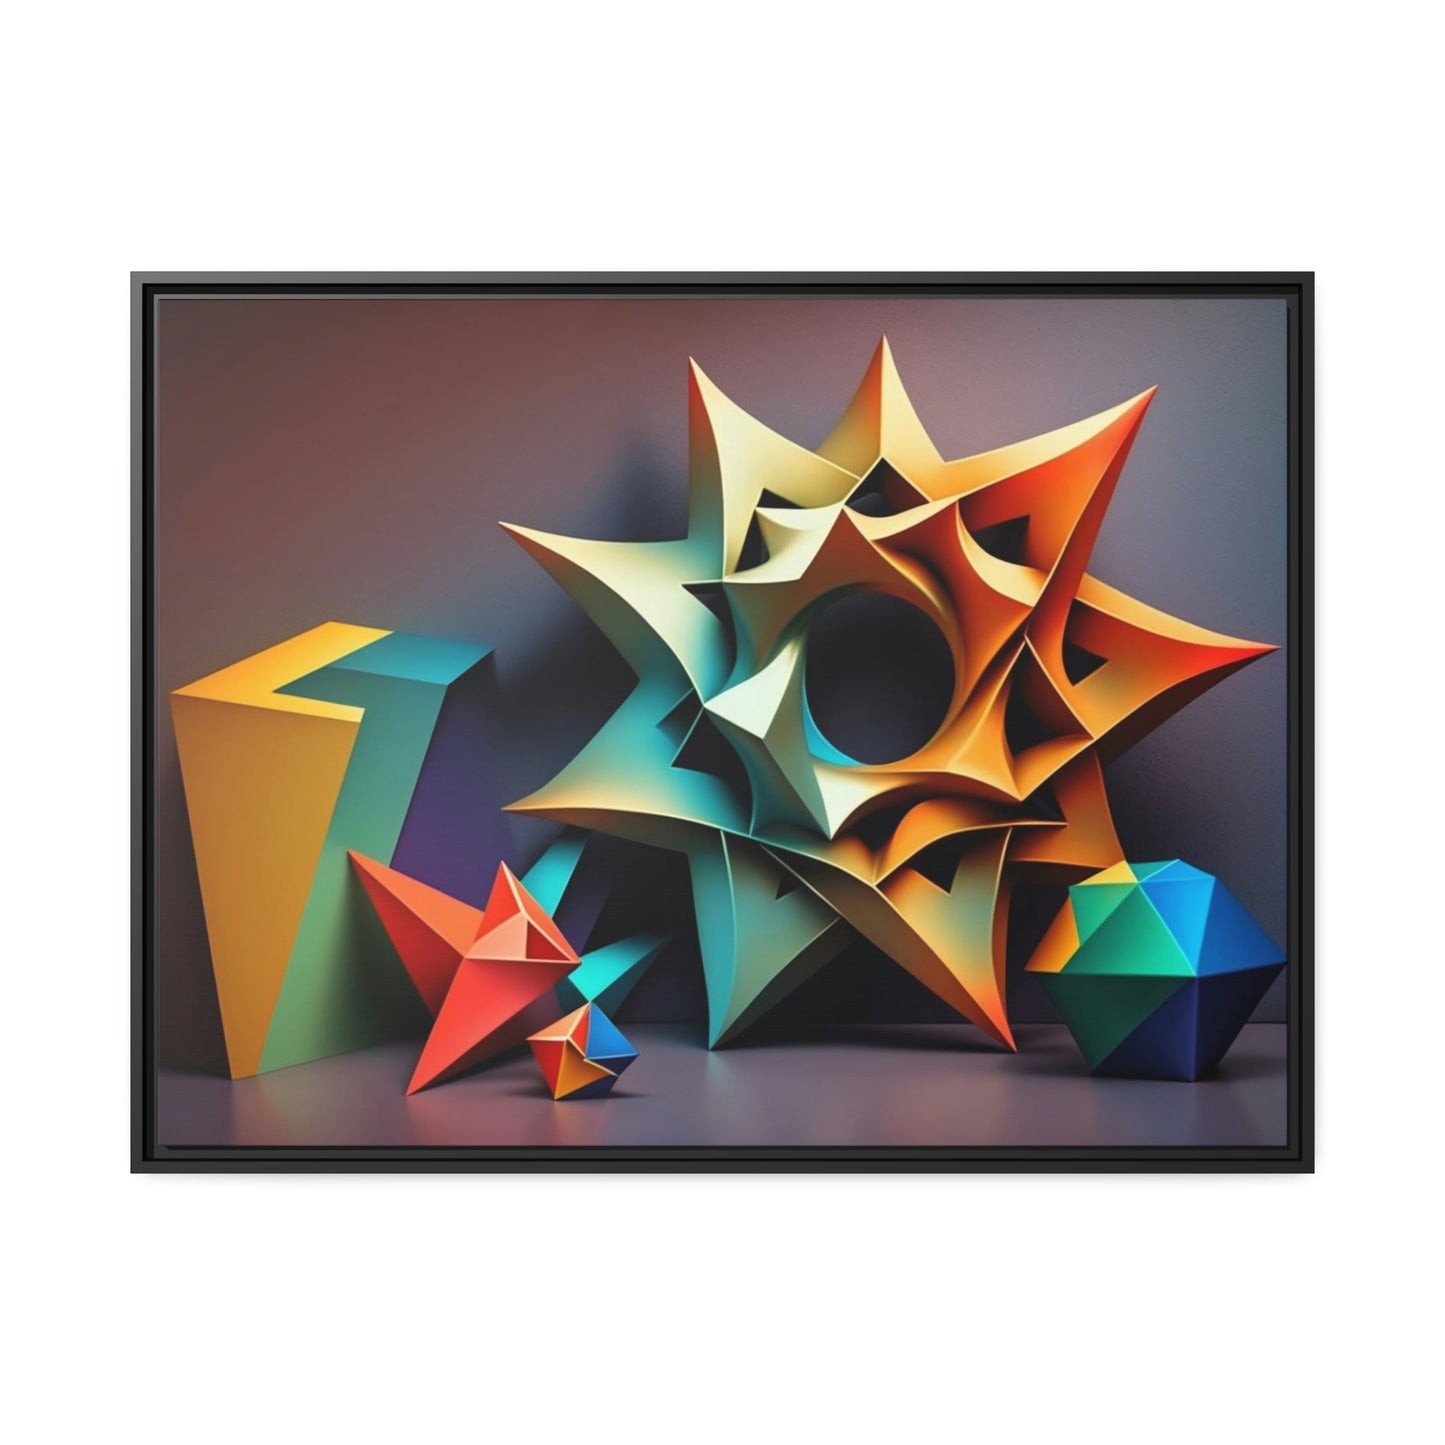 Geometric Dreams on Canvas: Modern Art in Vibrant Colors